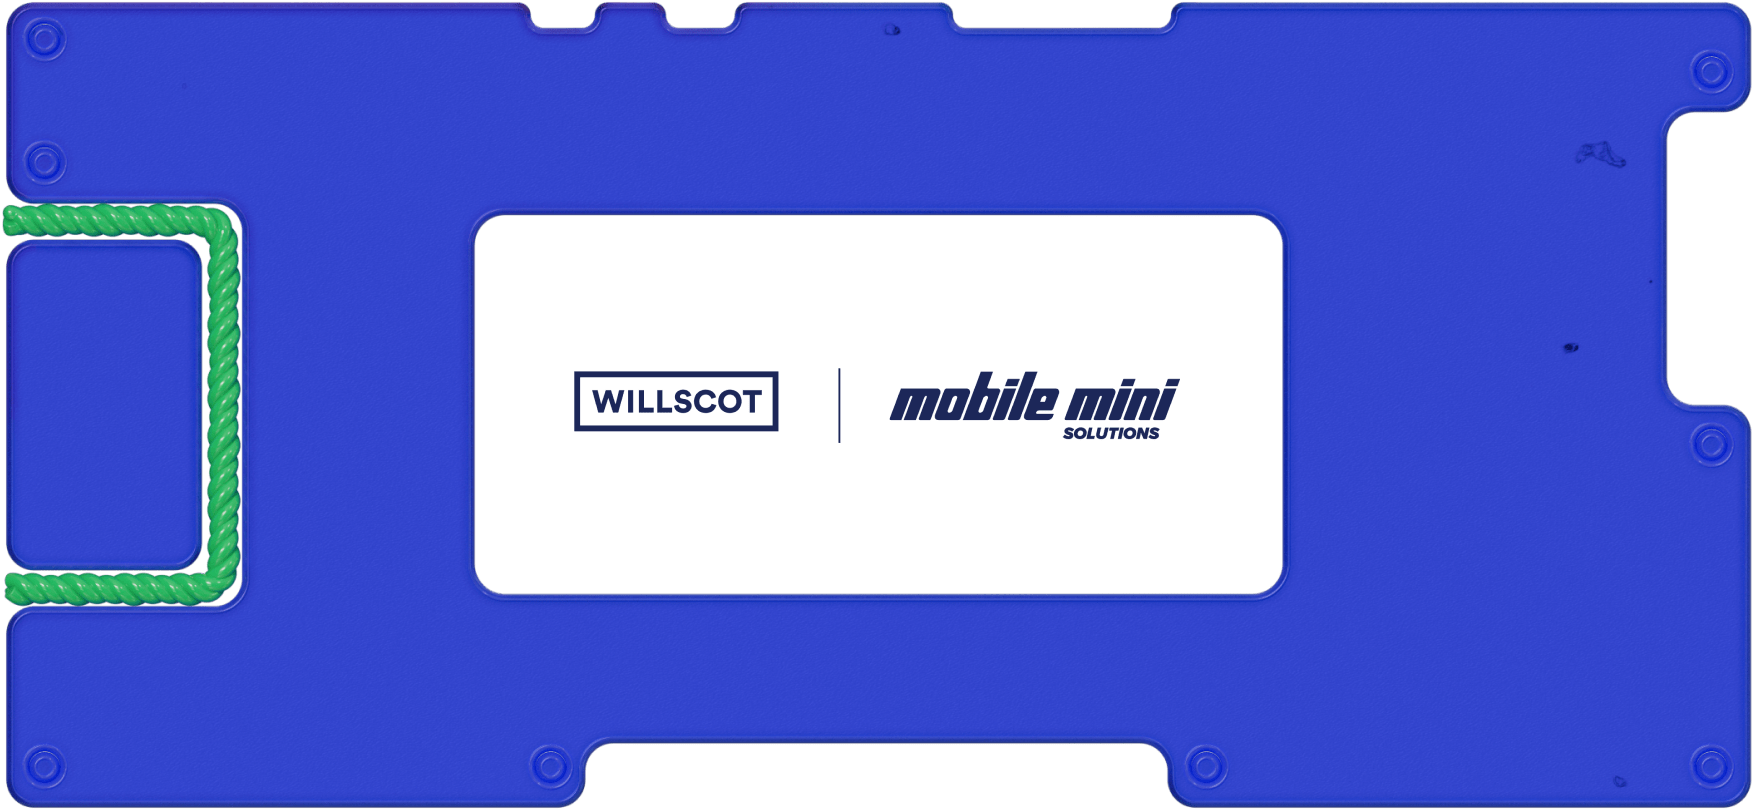 Вагончики и стройки: инвестируем в WillScot Mobile Mini